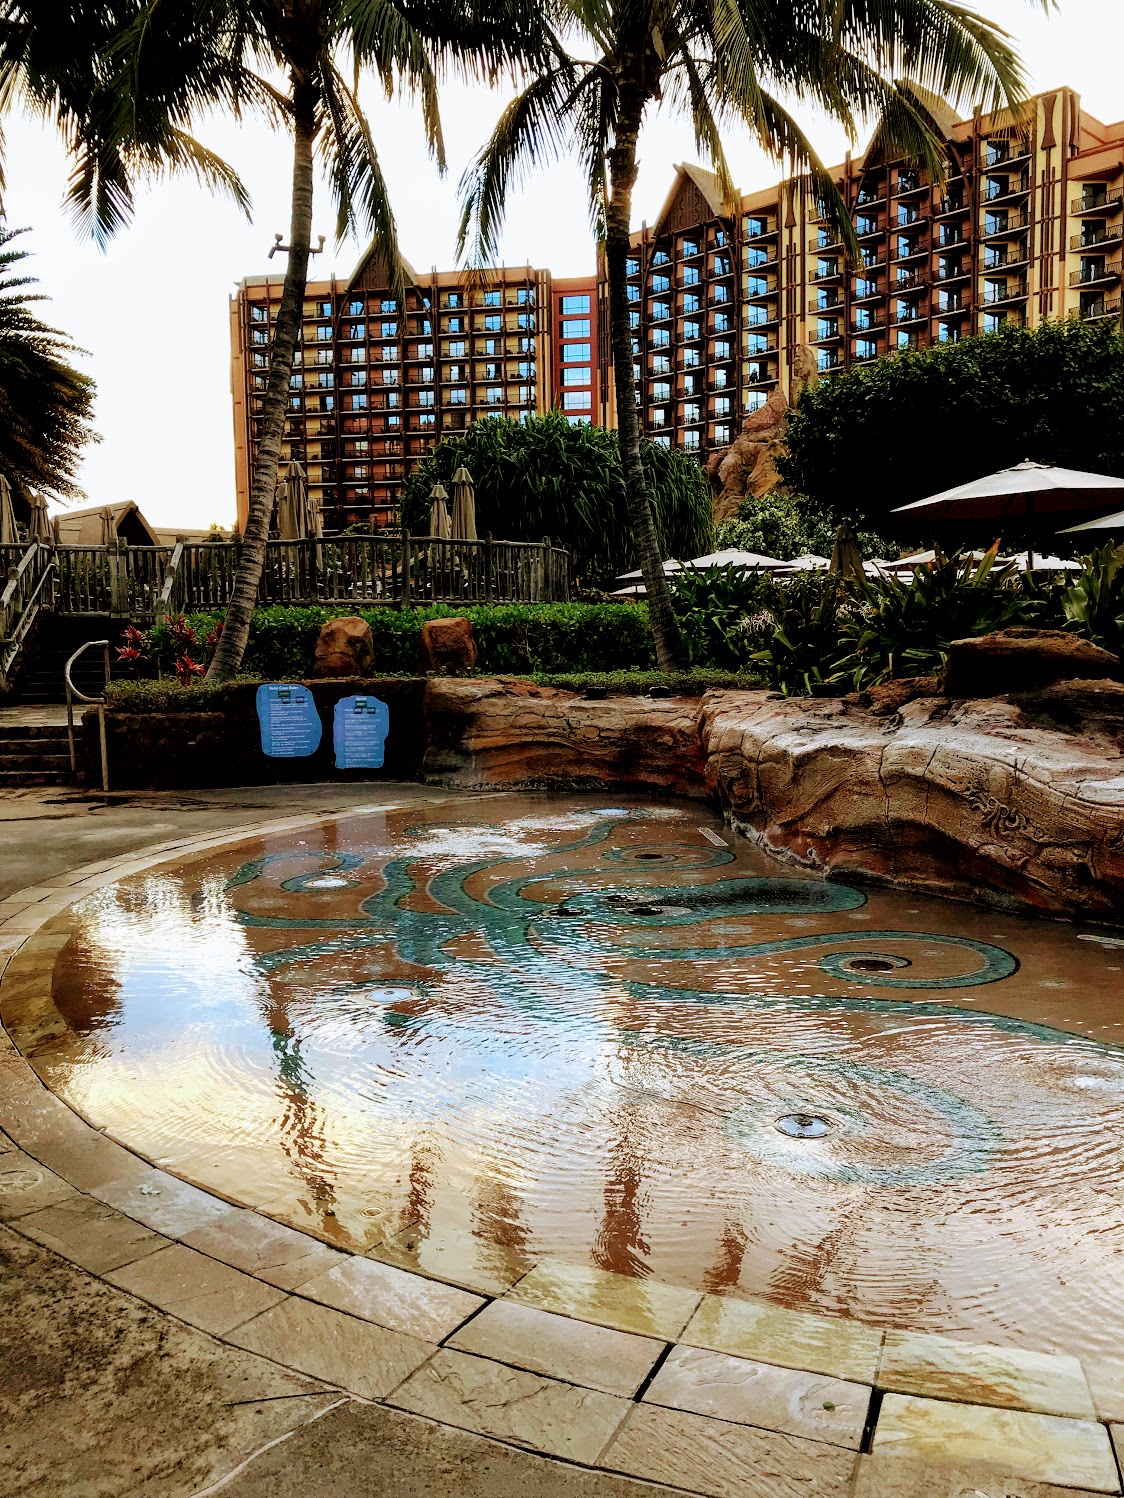 Keiki Cove Splash Zone Pool with Hotel backdrop